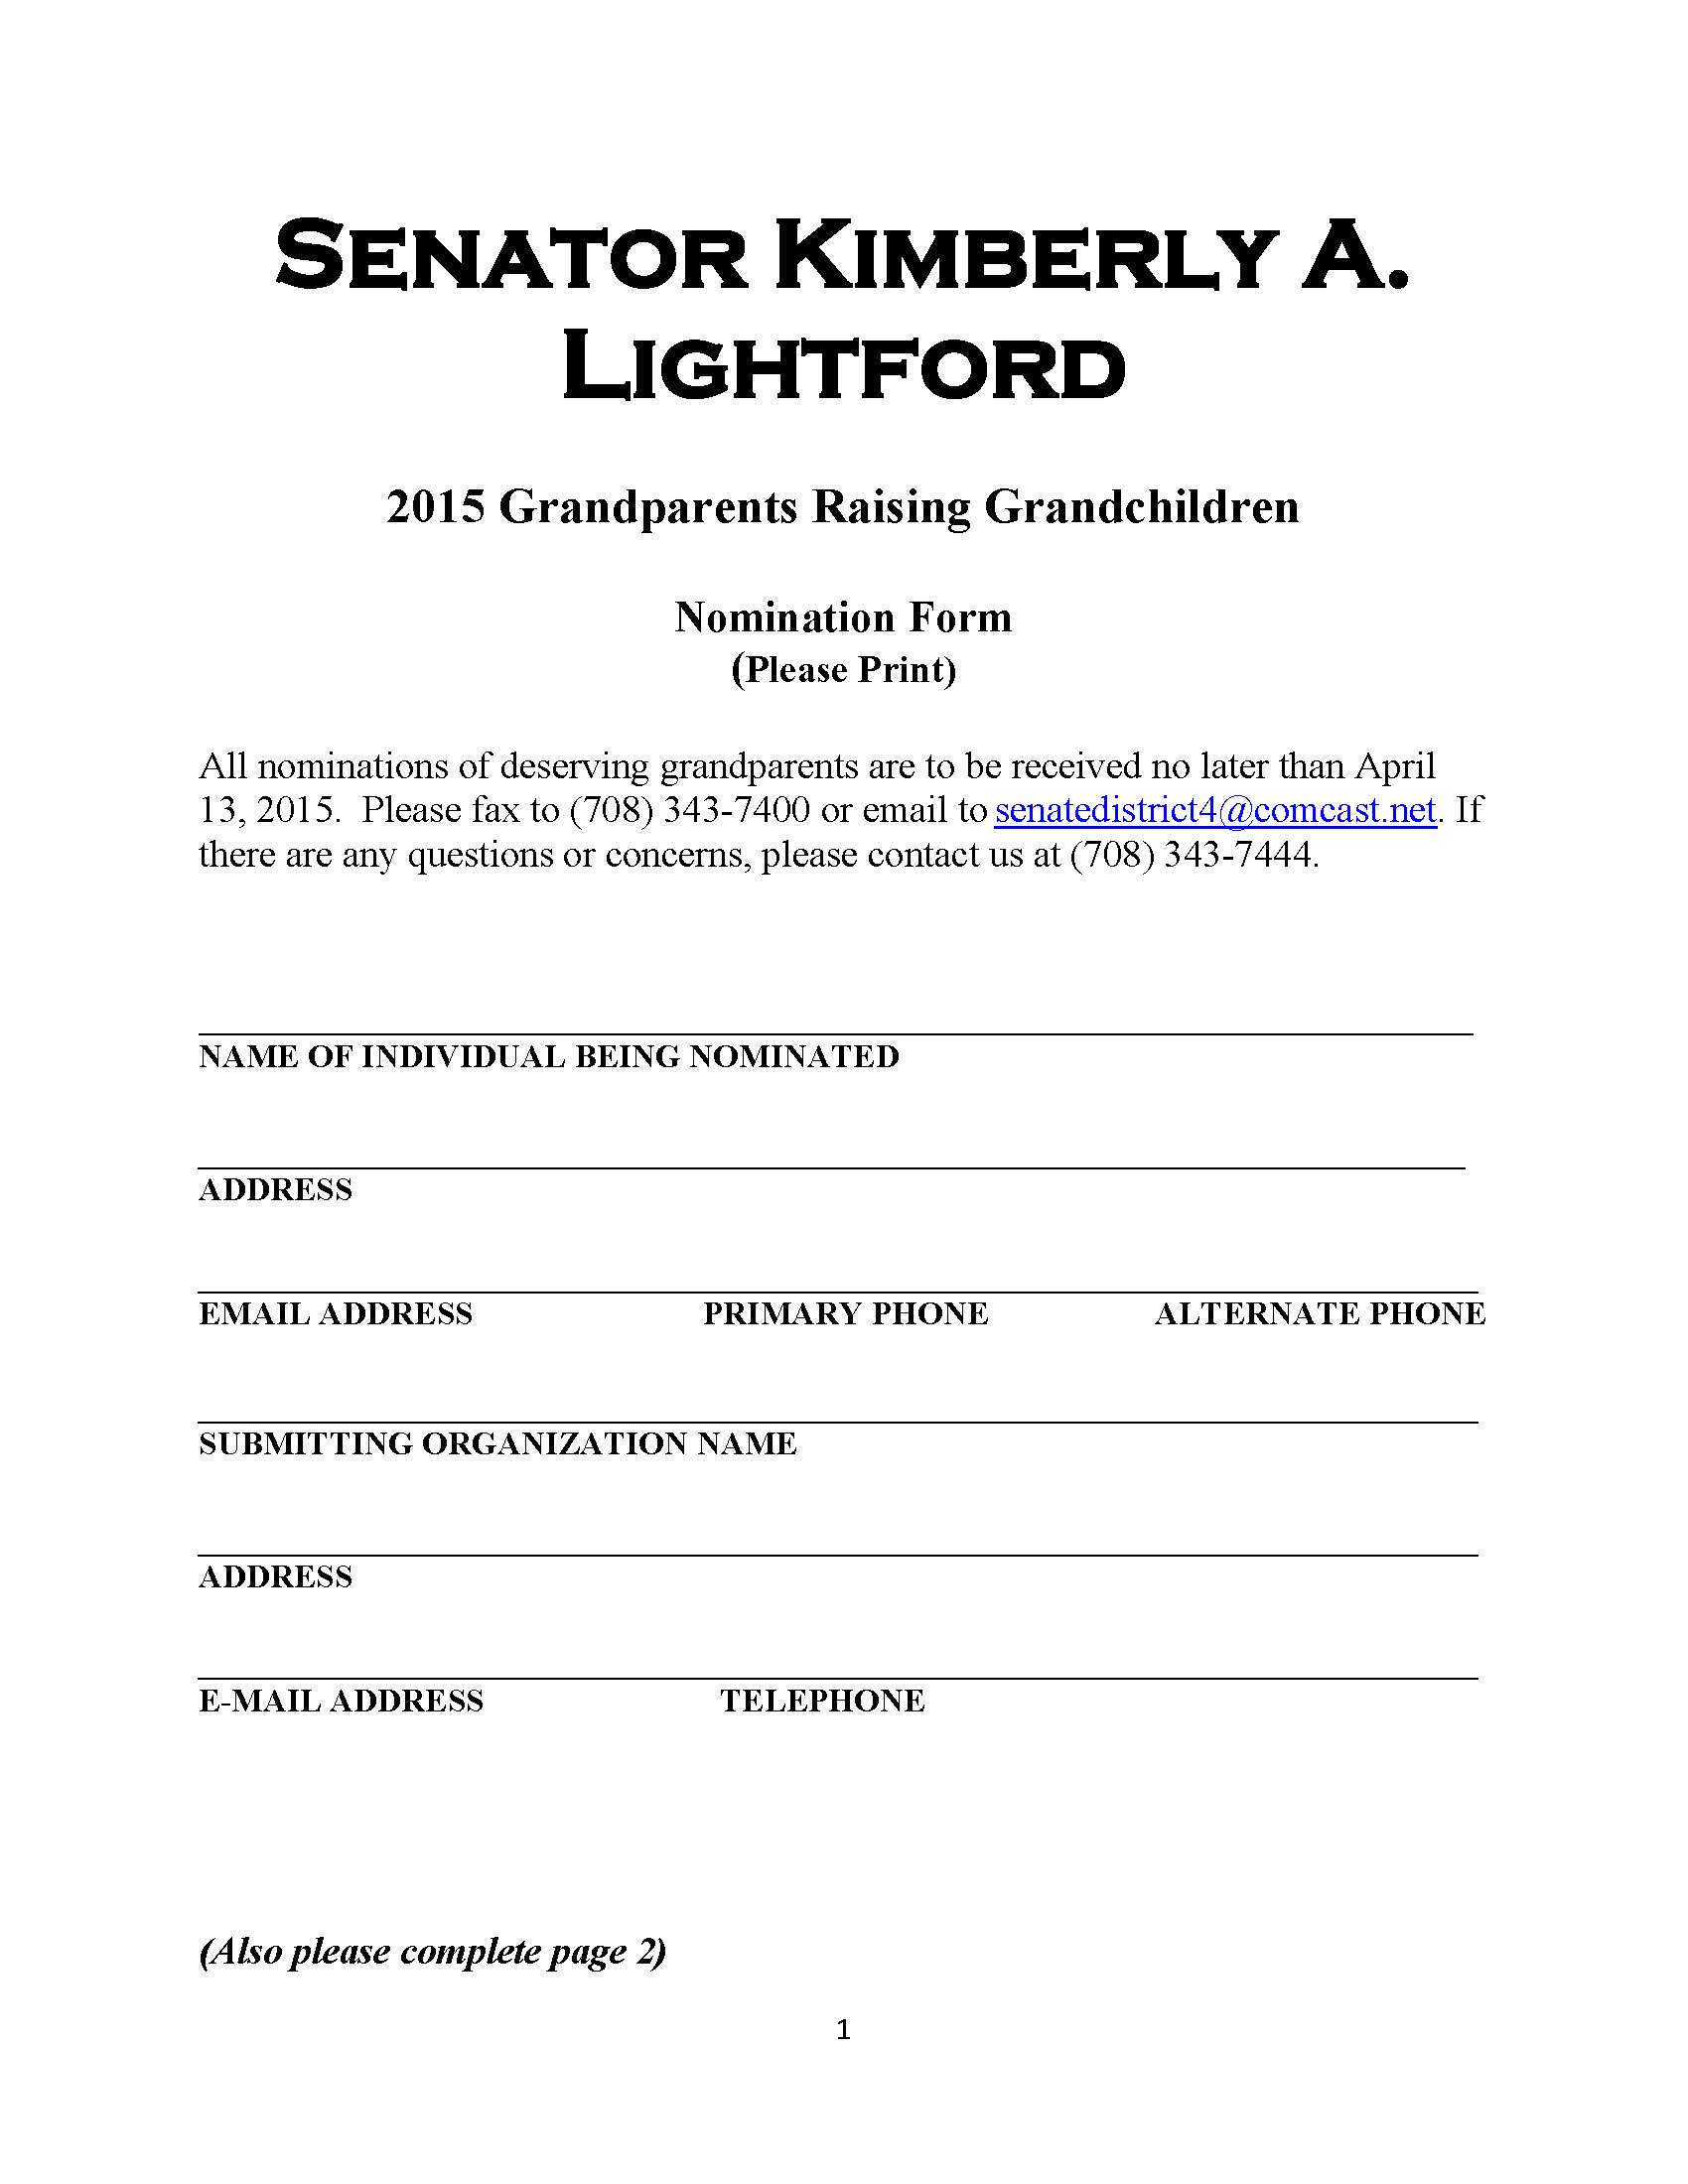 2015 Grandparents Raising Grandchildren Nomination Form r Page 1